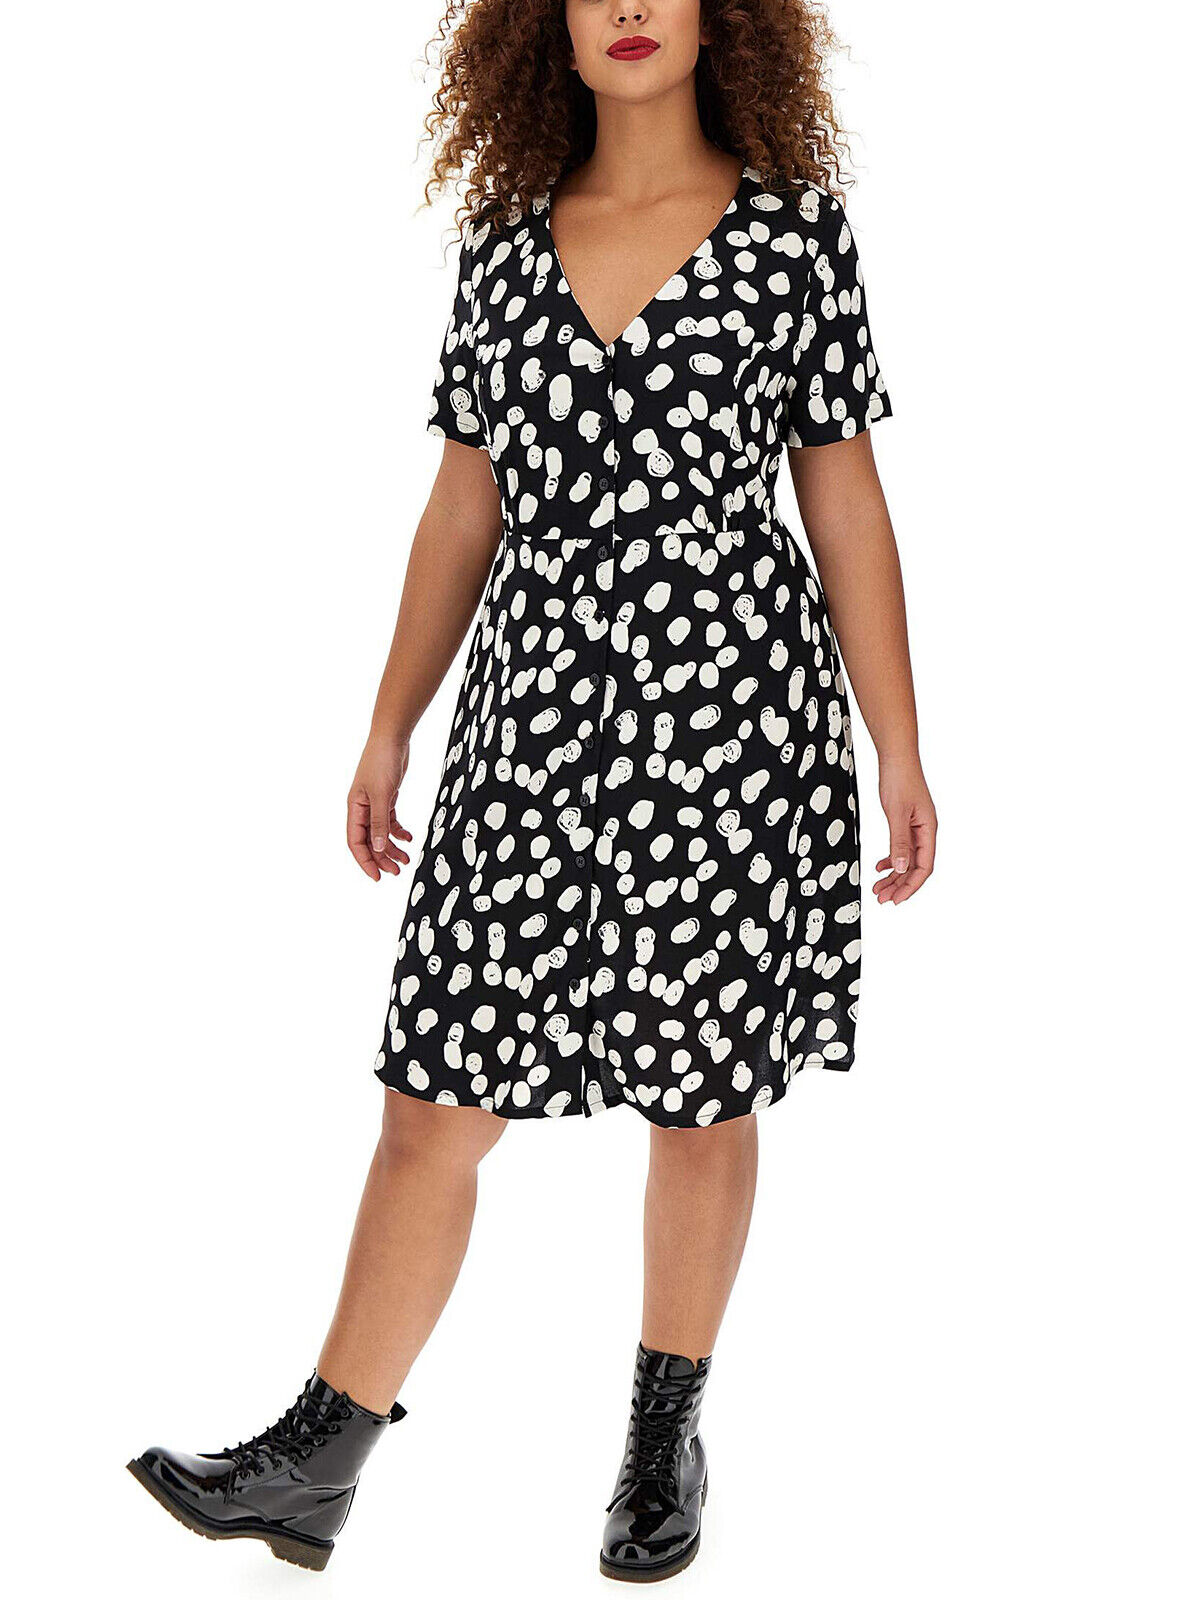 Simply Be Black Spot Print Tea Dress in Sizes 16 or 18